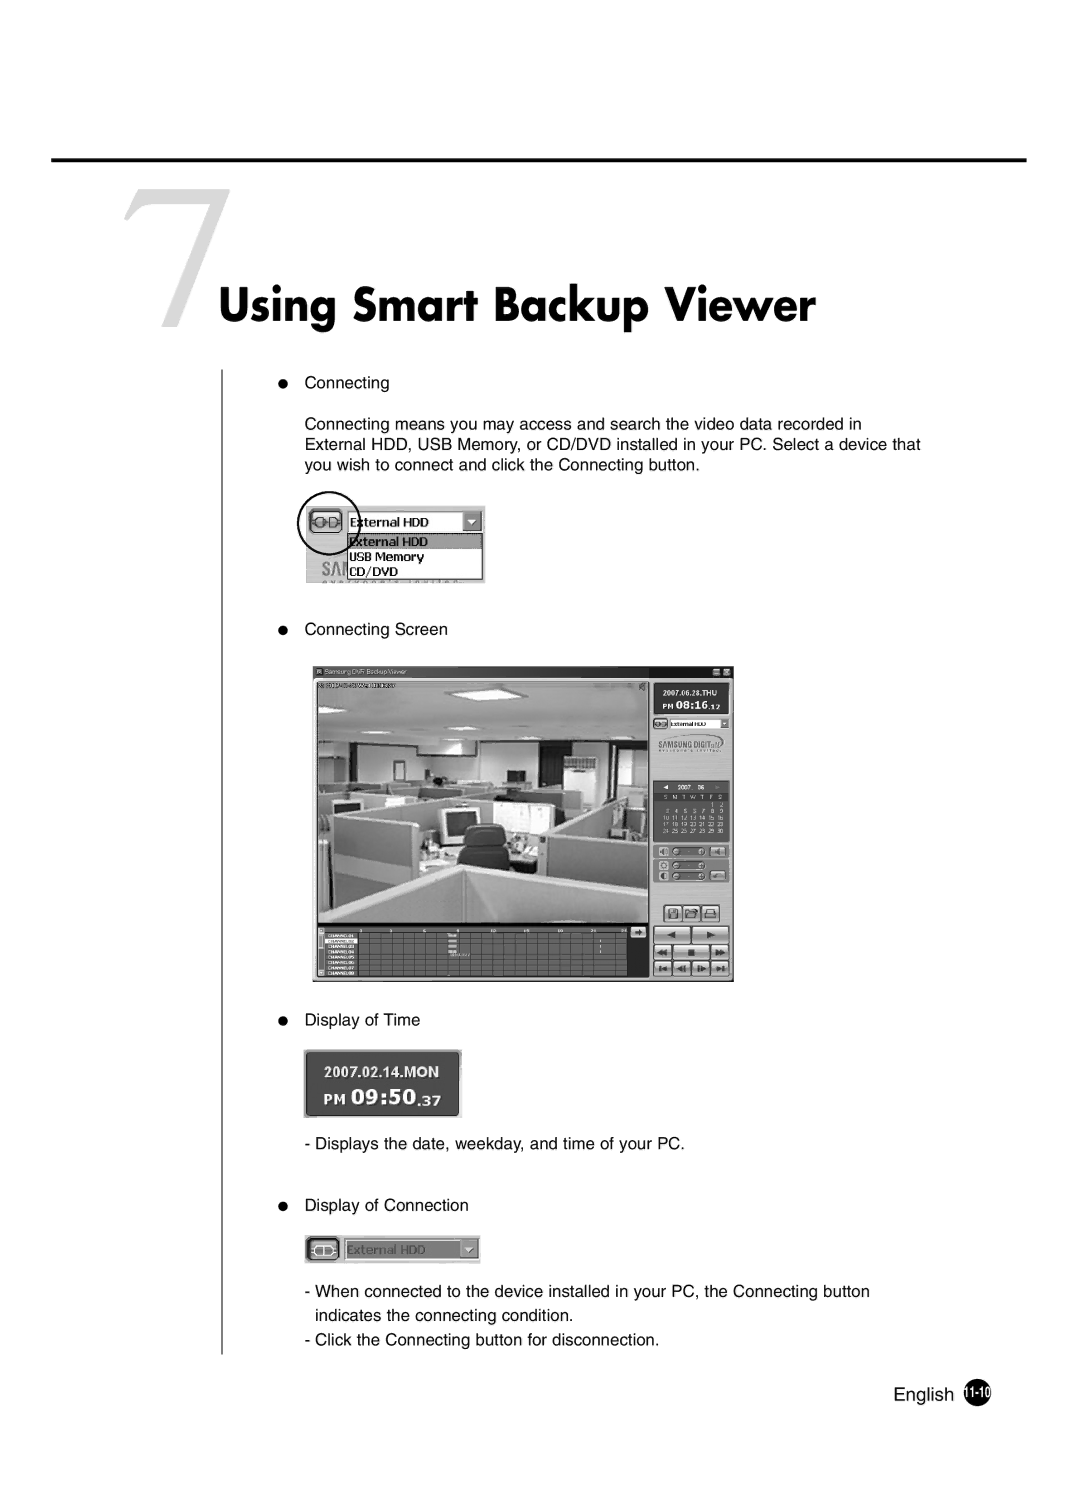 Samsung SHR-4160P manual 7Using Smart Backup Viewer 